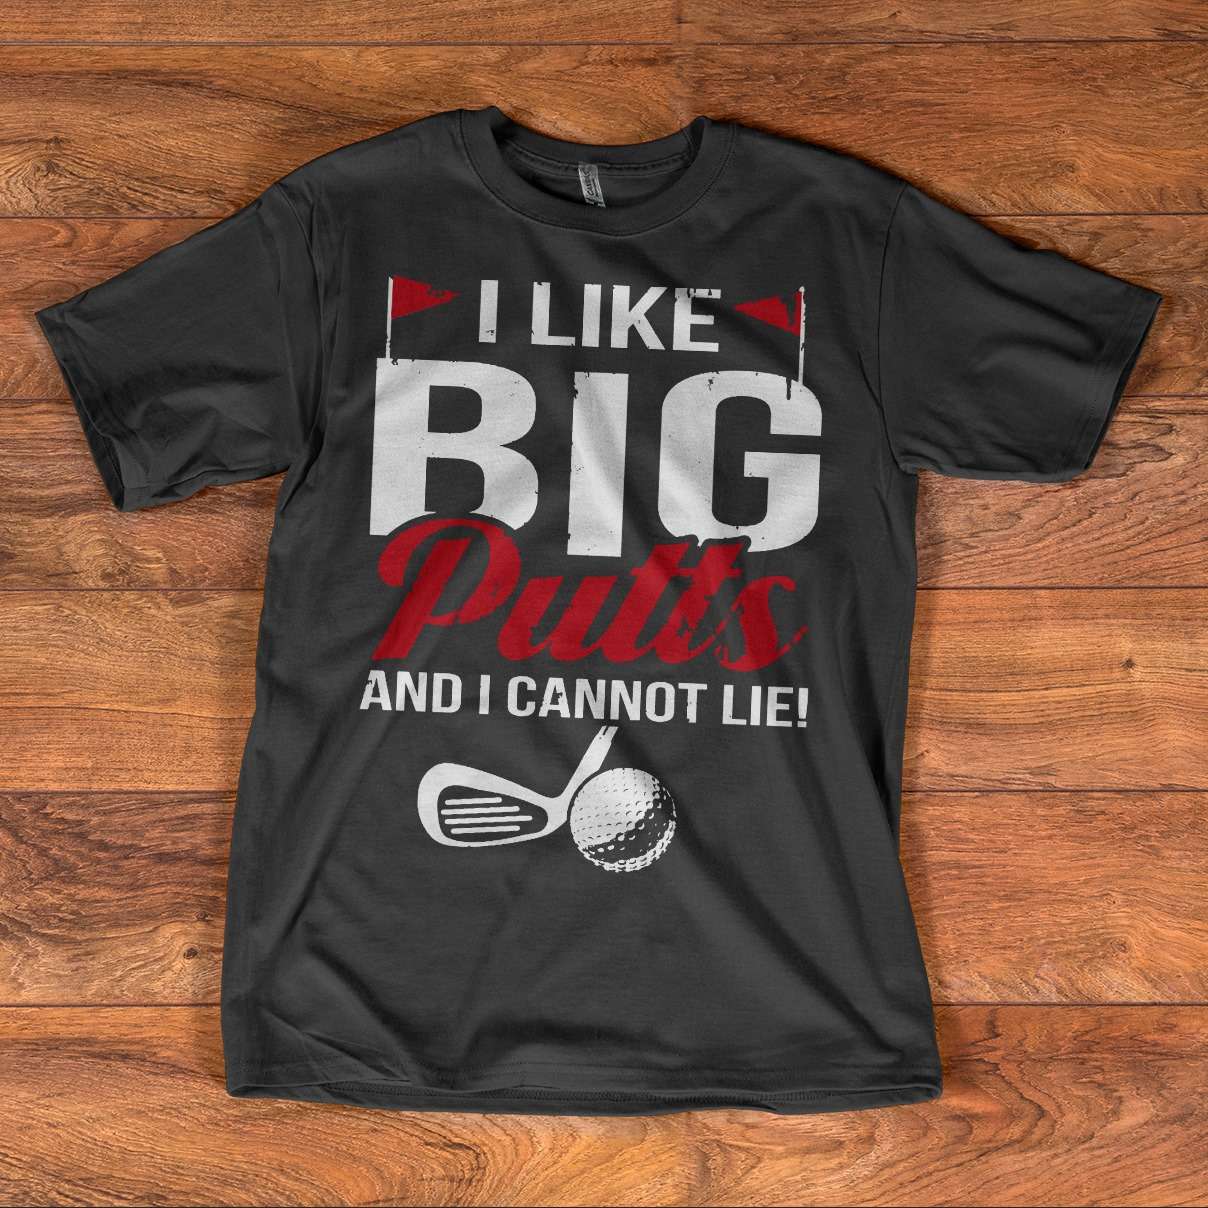 I like big putts and I cannot lie - Big putt golf, T-shirt for golfers